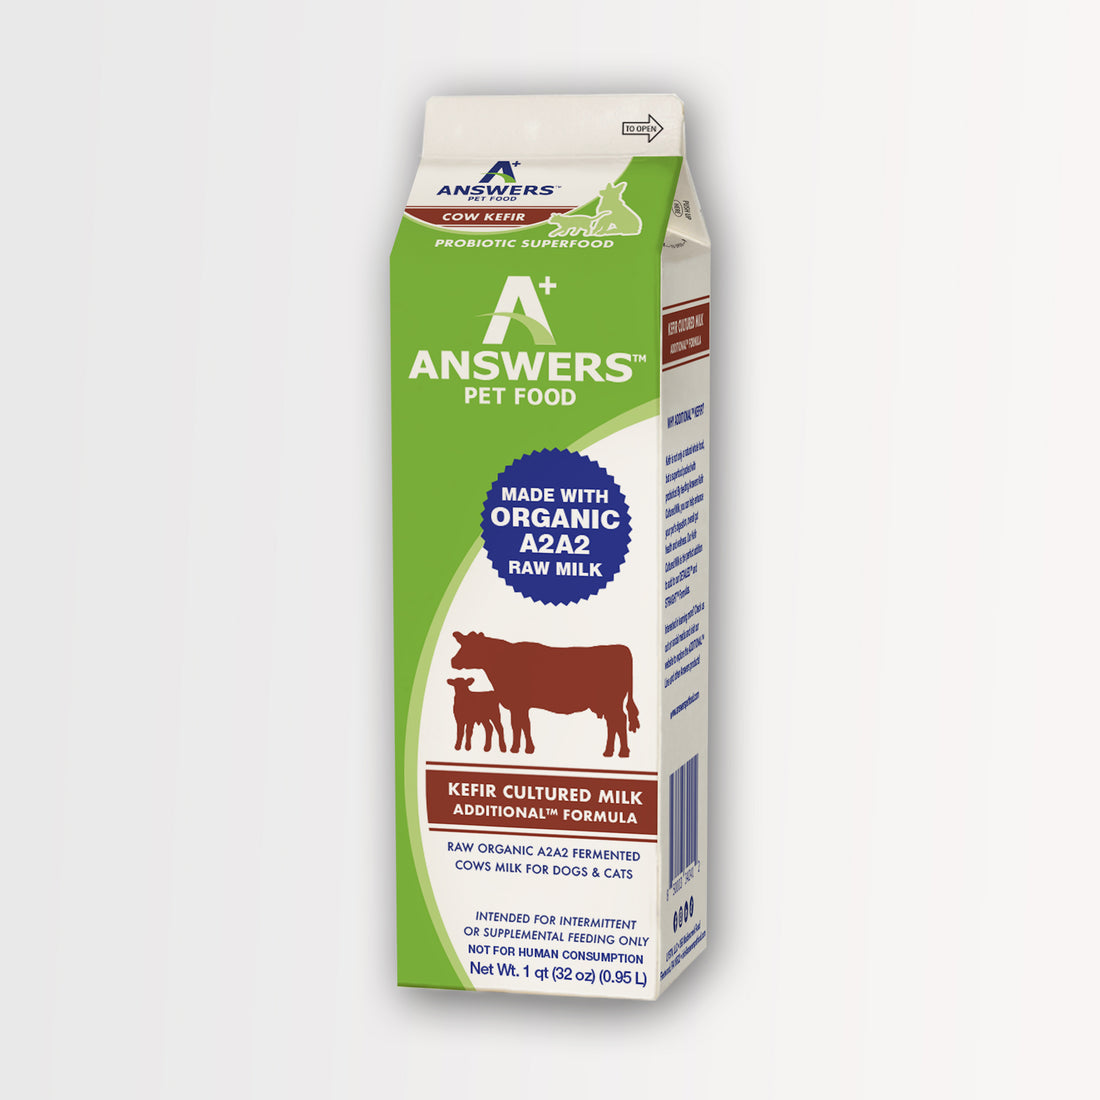 Additional Organic Raw Cow Milk Kefir - North Carolina, Texas, and Vermont